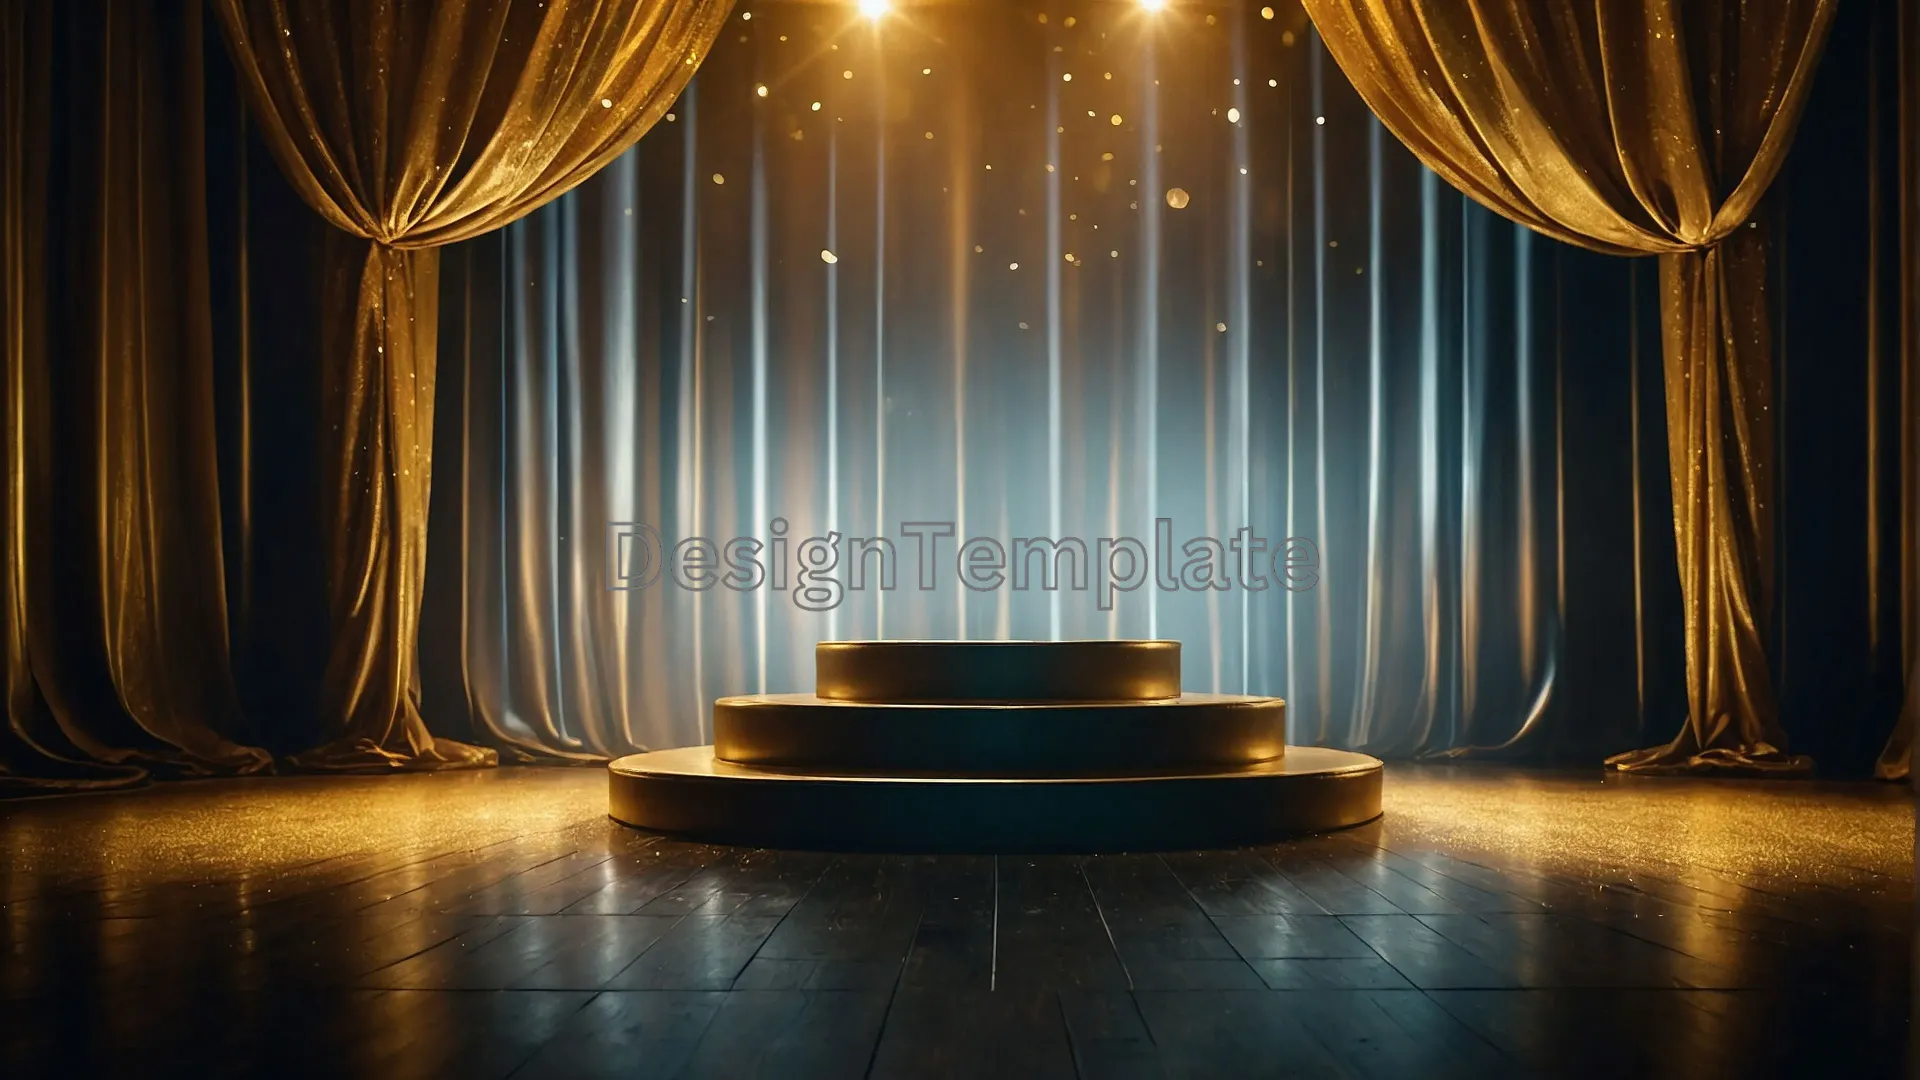 Captivating Image Award Show Stage Enhanced with Fresh Golden Fabric